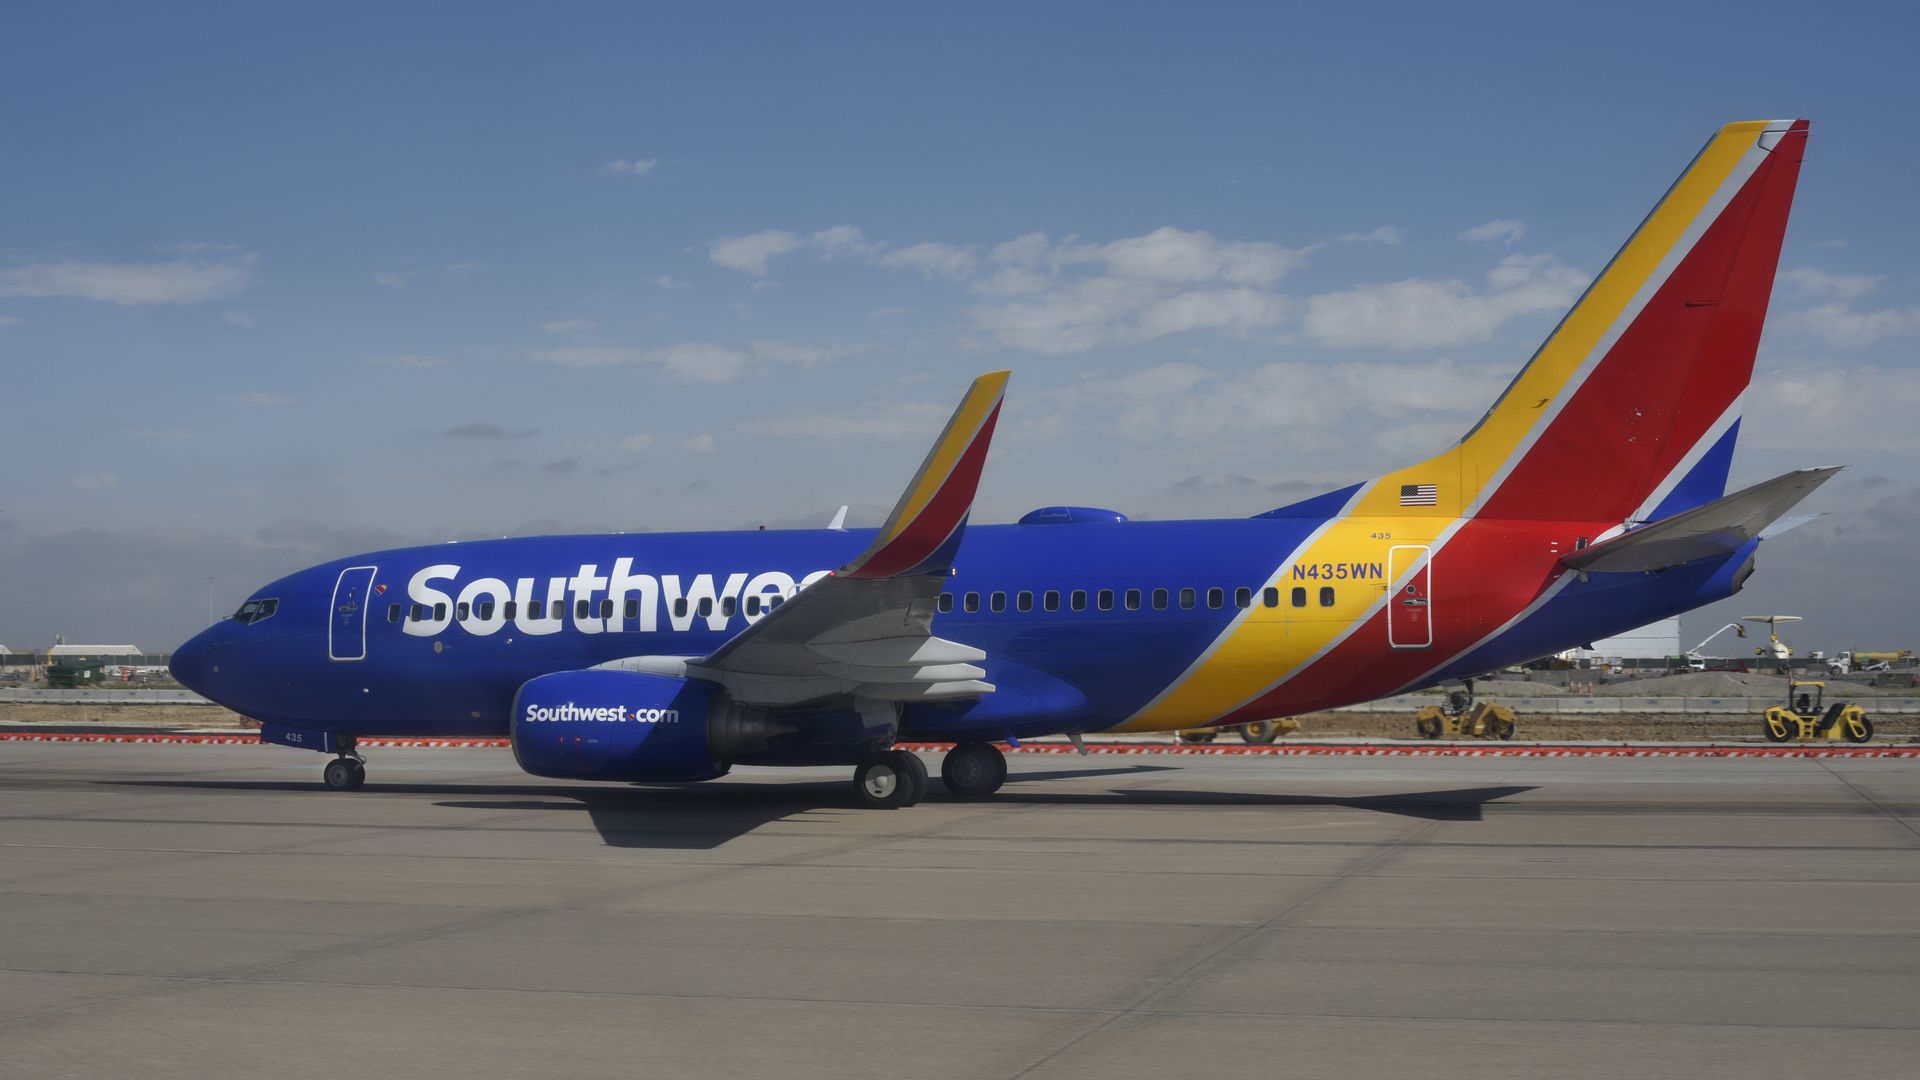 A Southwest Airline plane